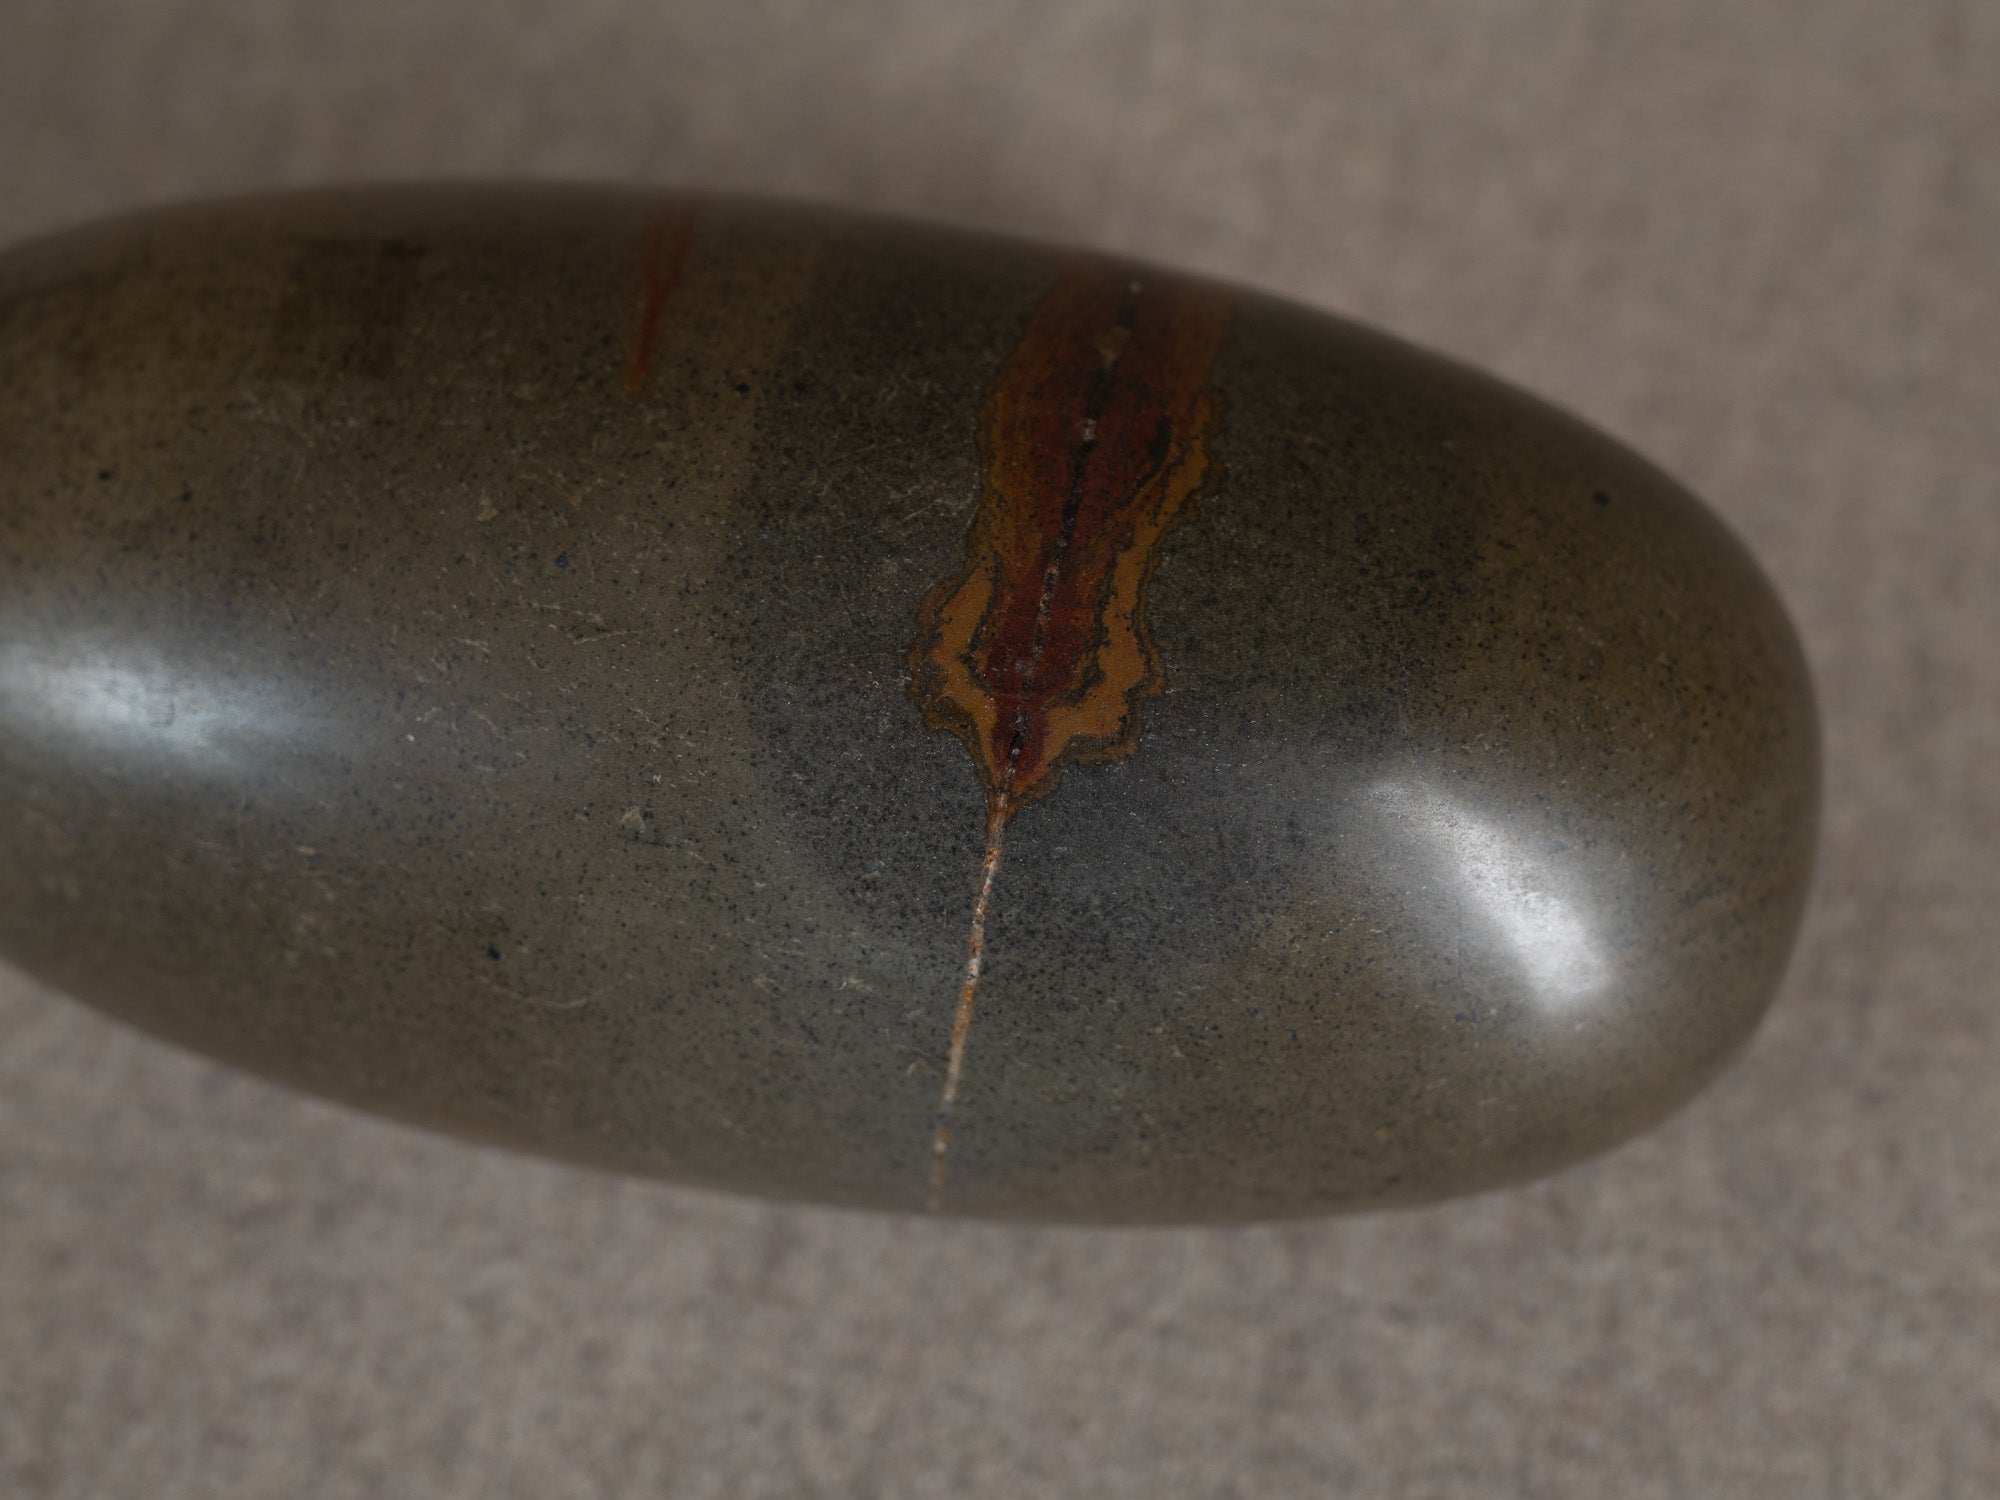 Shiva Lingam "œuf cosmique", jaspe sacrée hindouiste, Inde..Shiva Lingam "cosmic egg", hindu sacred jasper Narmada river stone, India